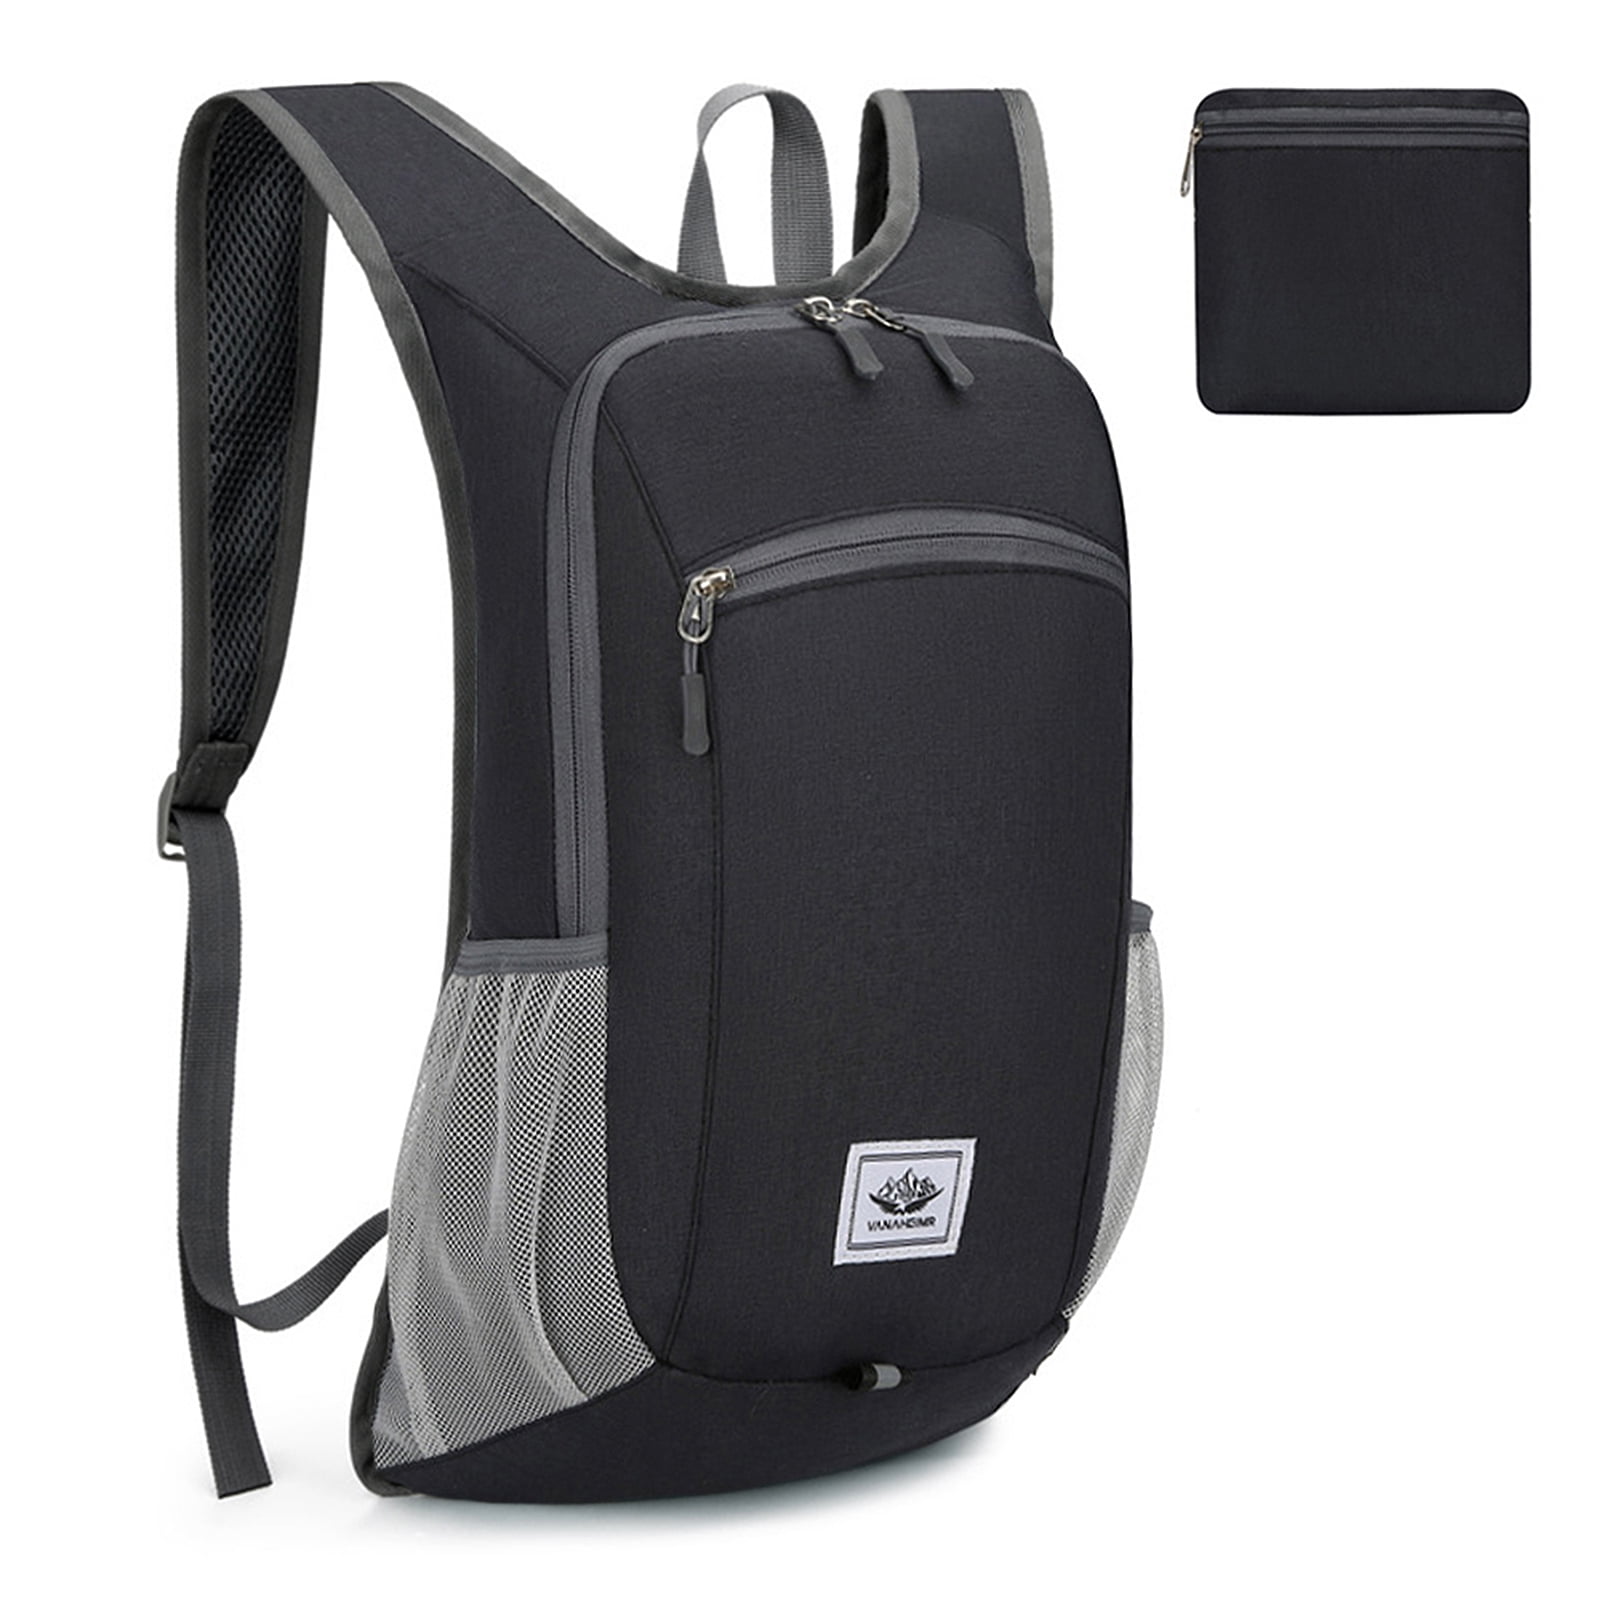 VANAHEIMR Lightweight Foldable Backpack Waterproof Packable Travel ...